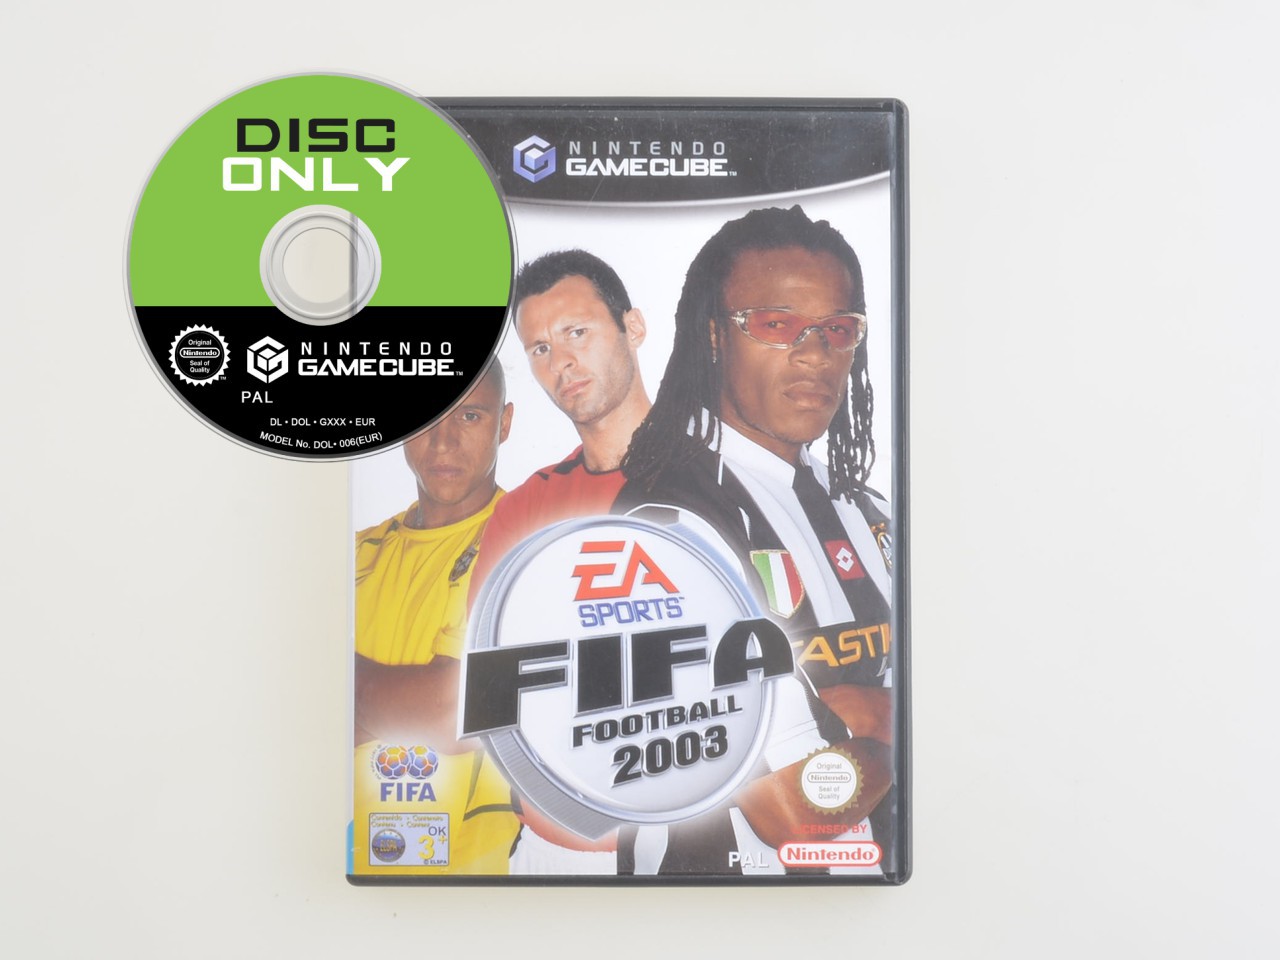 FIFA Football 2003 - Disc Only Kopen | Gamecube Games